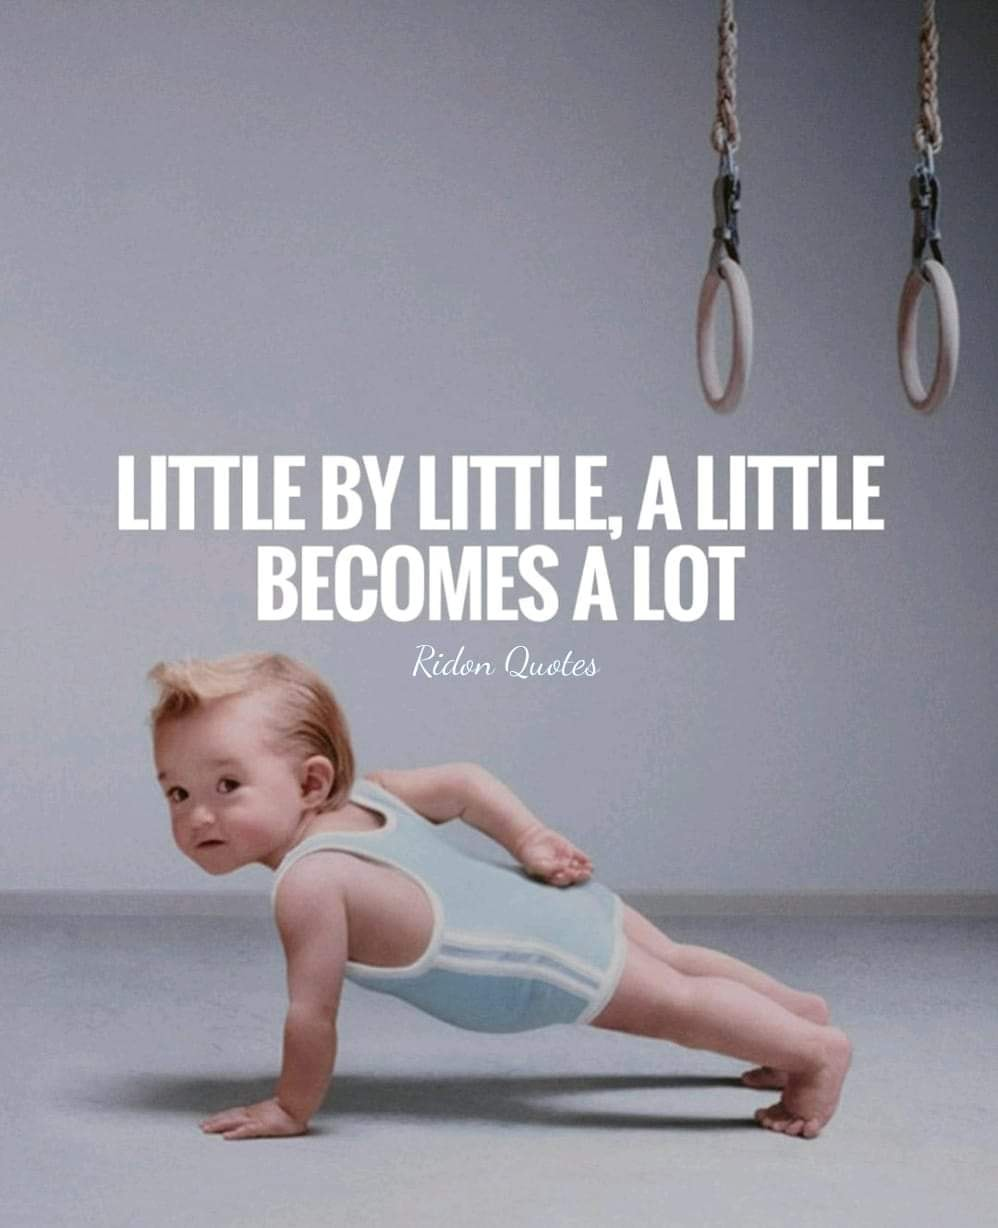 Little by little, a little becomes a lot.